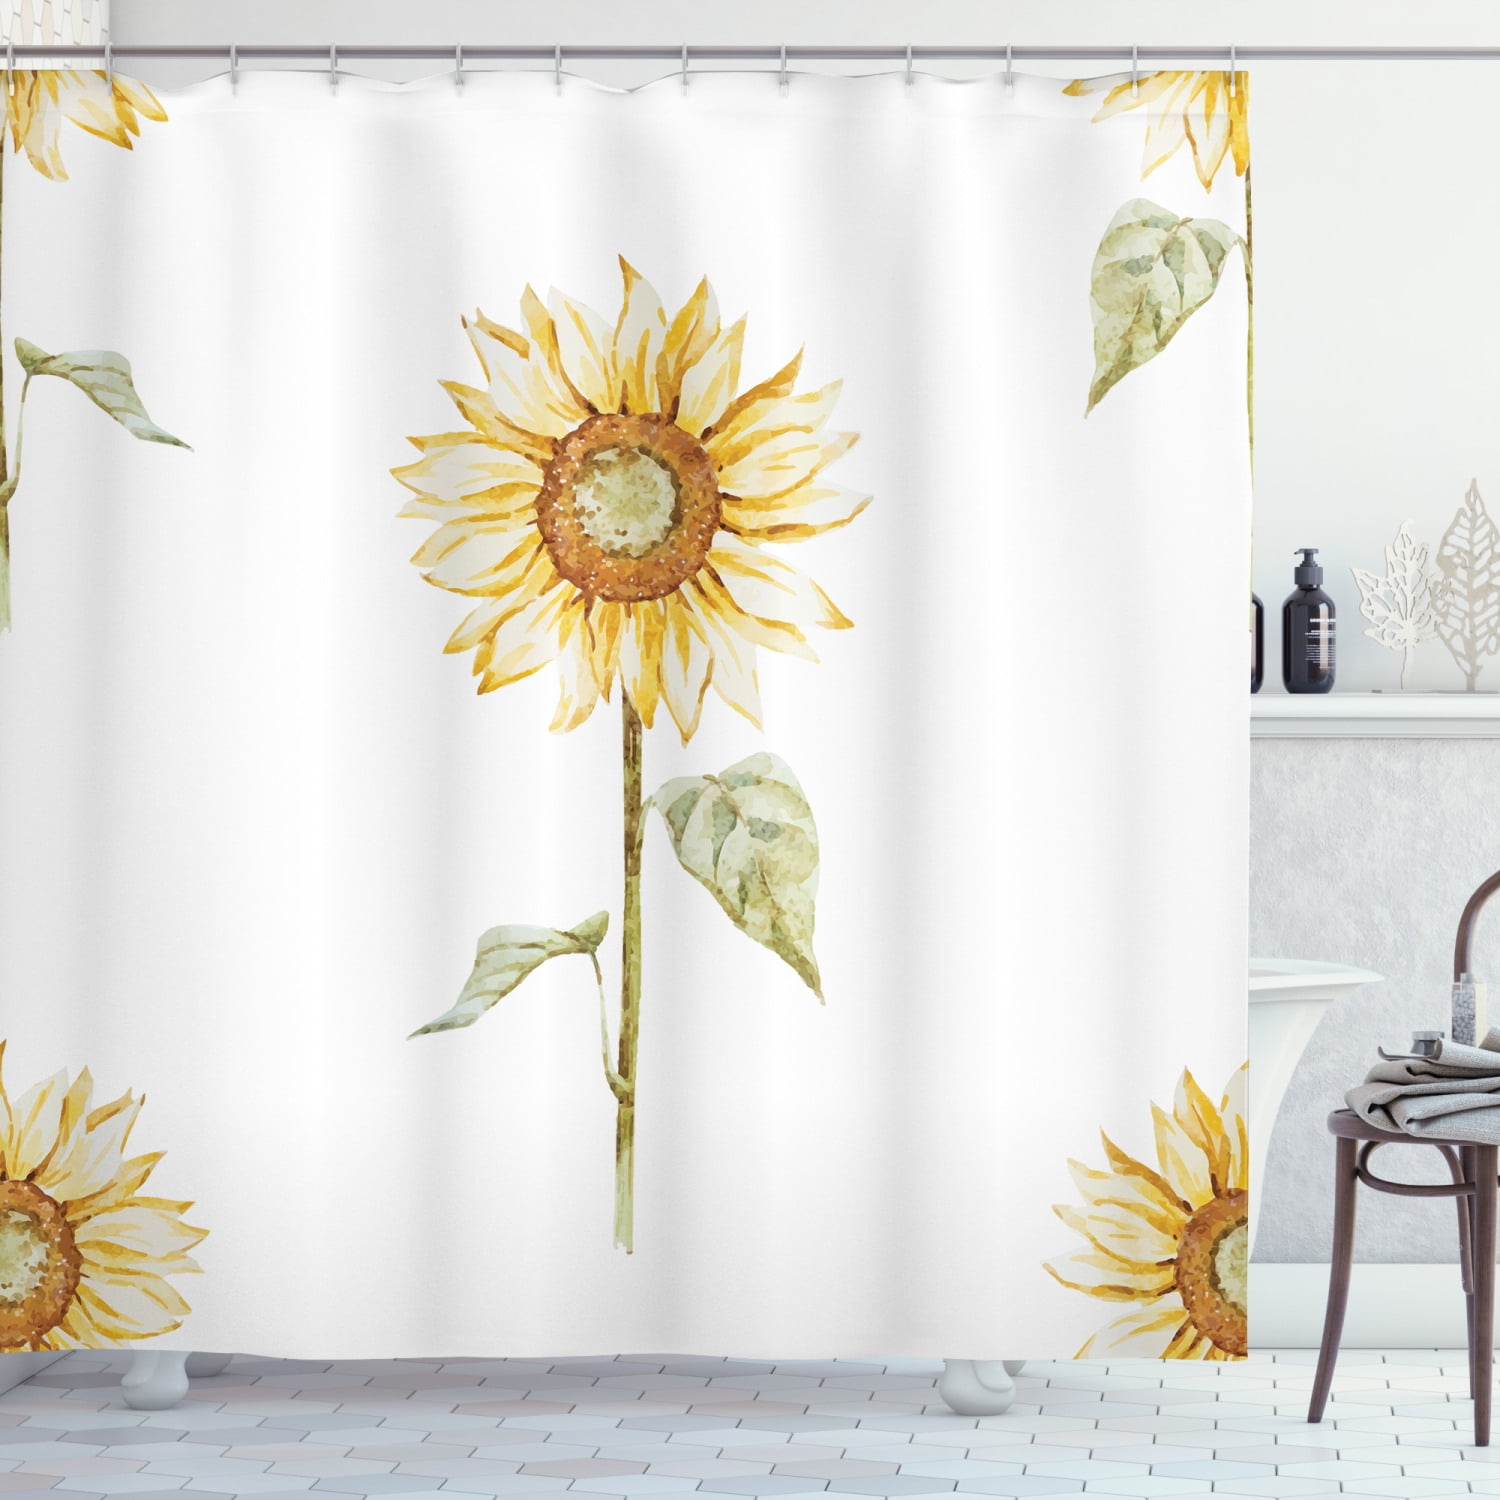 Blue Sky White Cloud Big Sunflower Shower Curtain Set Waterproof Fabric Hooks 